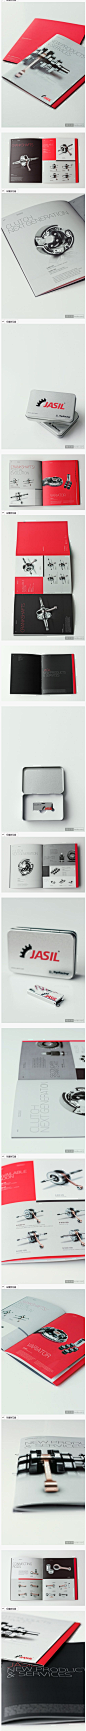 Jasil新产品宣传册设计-版式设计-独创意设计网